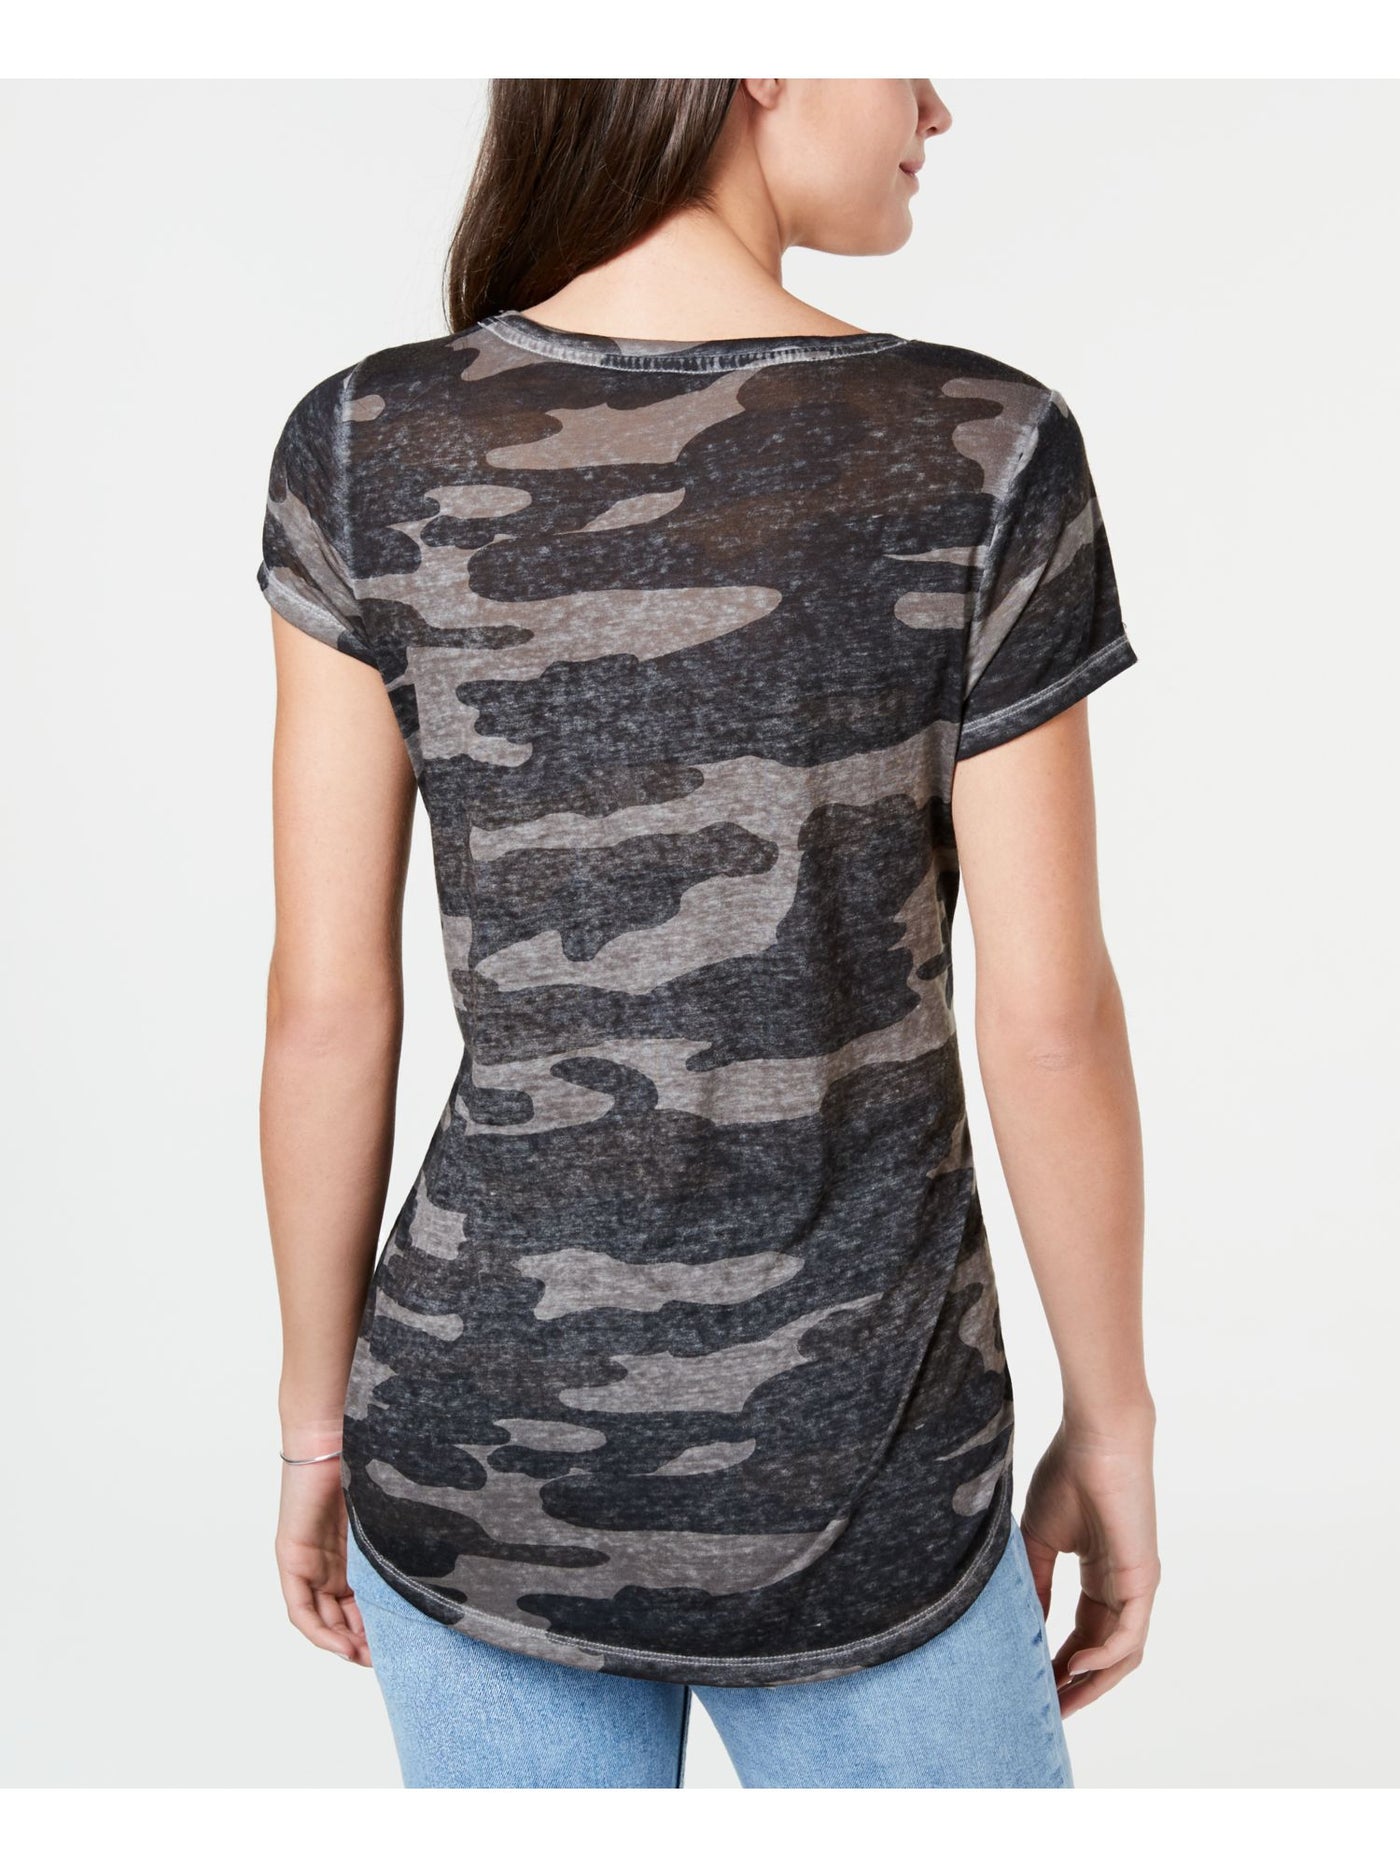 LUCKY BRAND Womens Gray Camouflage Short Sleeve V Neck T-Shirt XS